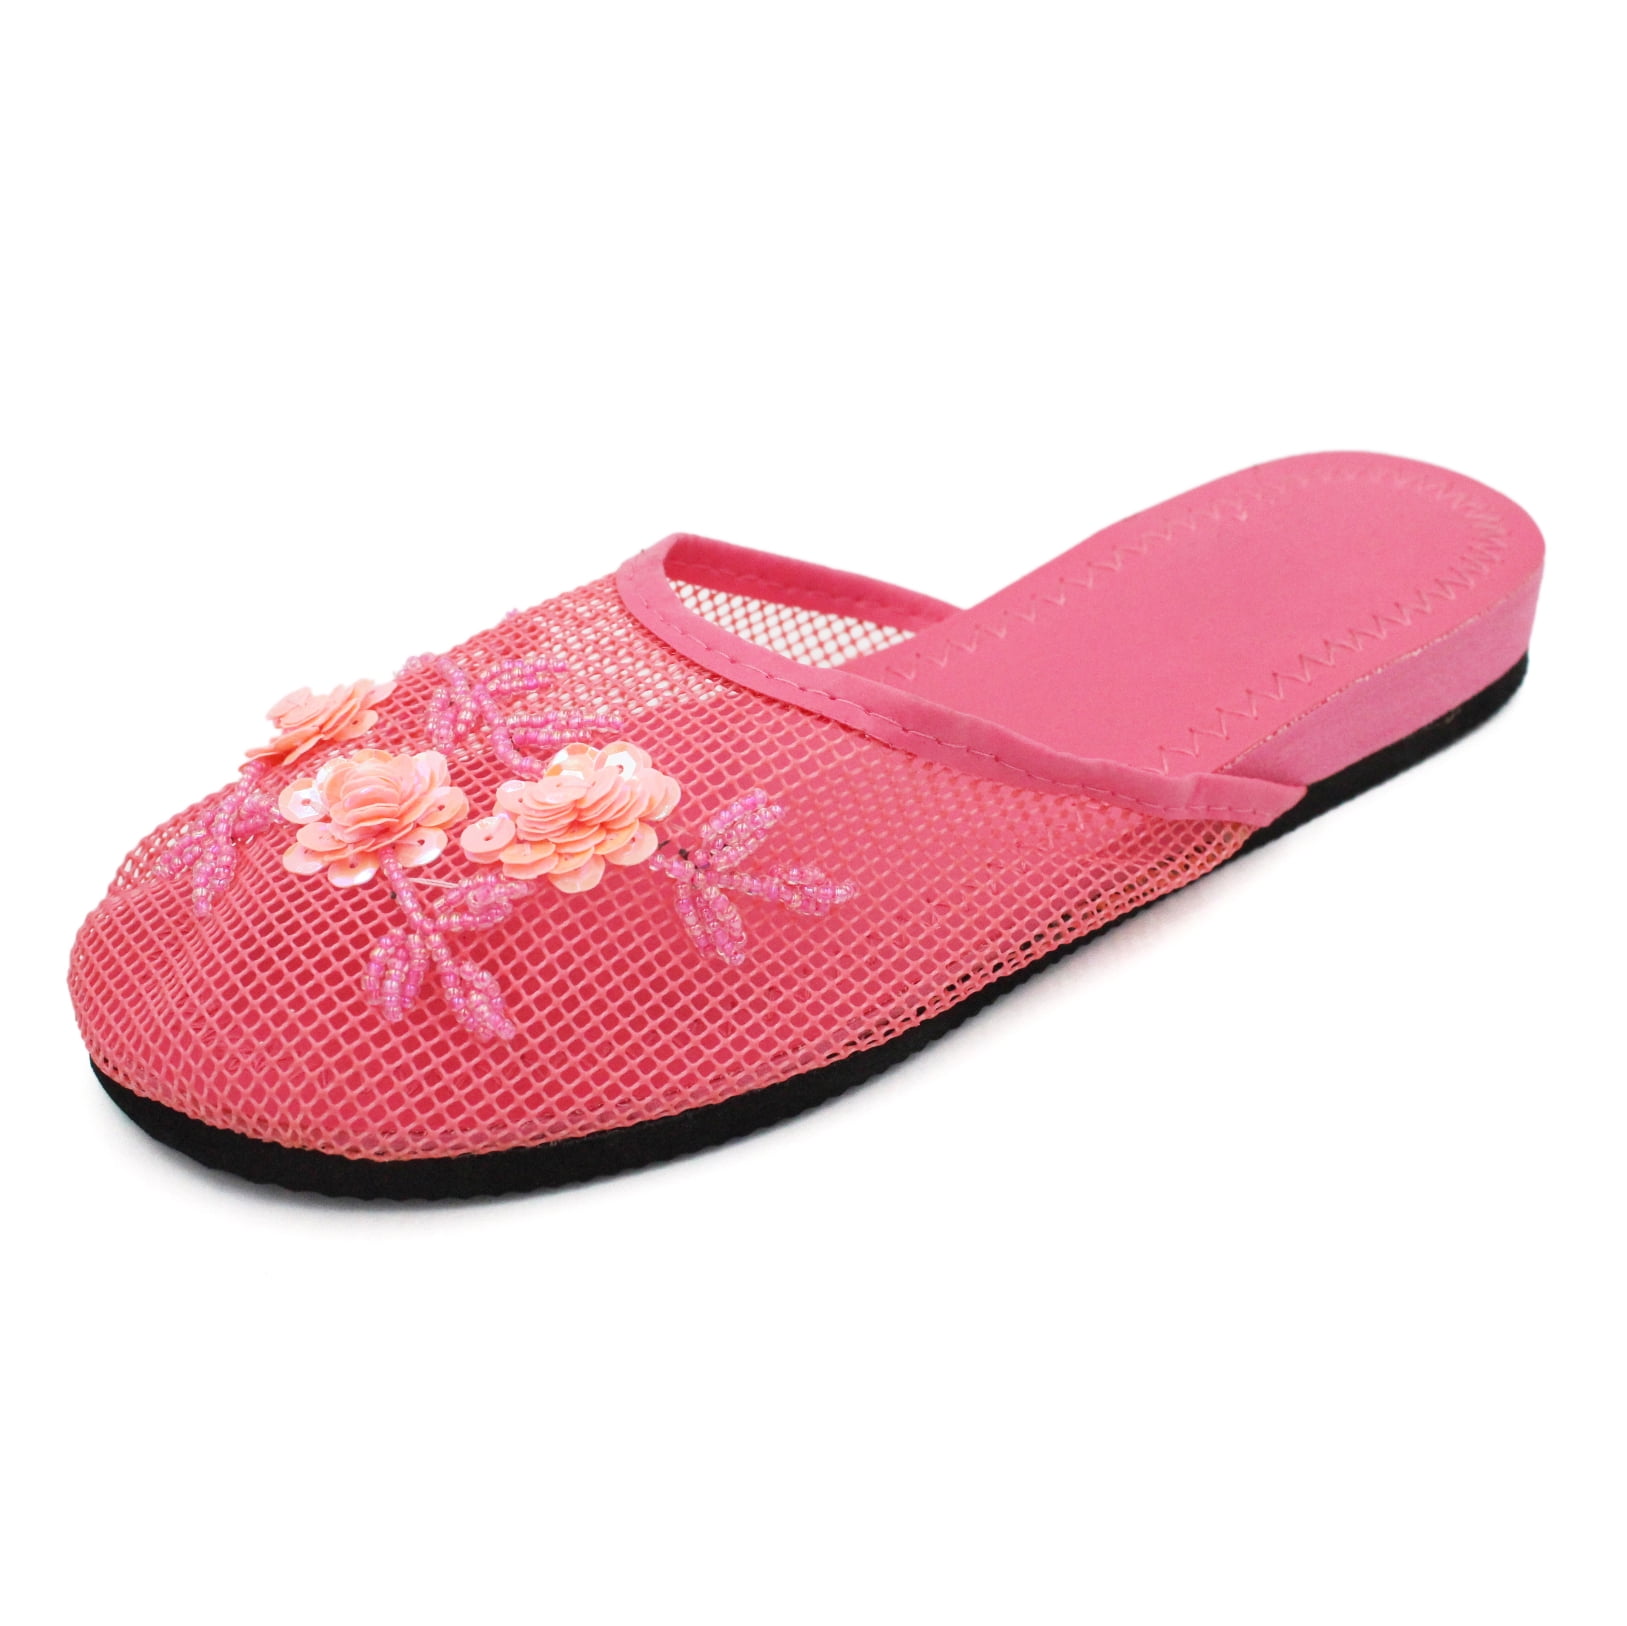 Couple Flip Flops Plum Flora Print Chic Sandals Slipper Rubber Non-Slip Spa Thong Slippers